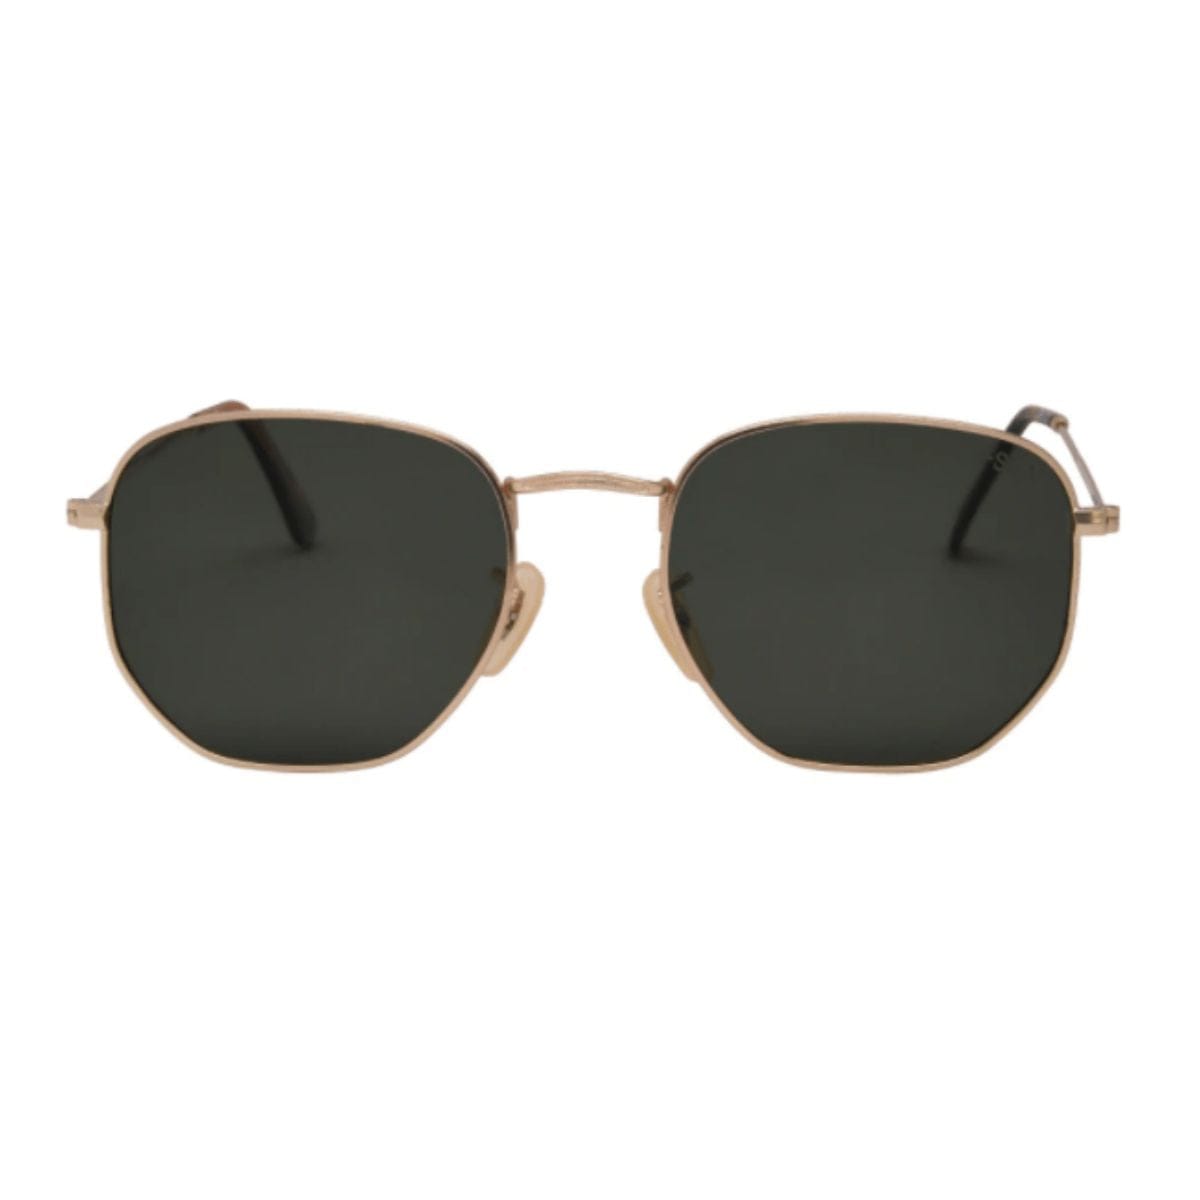 Penn Sunglasses (Gold/Green)